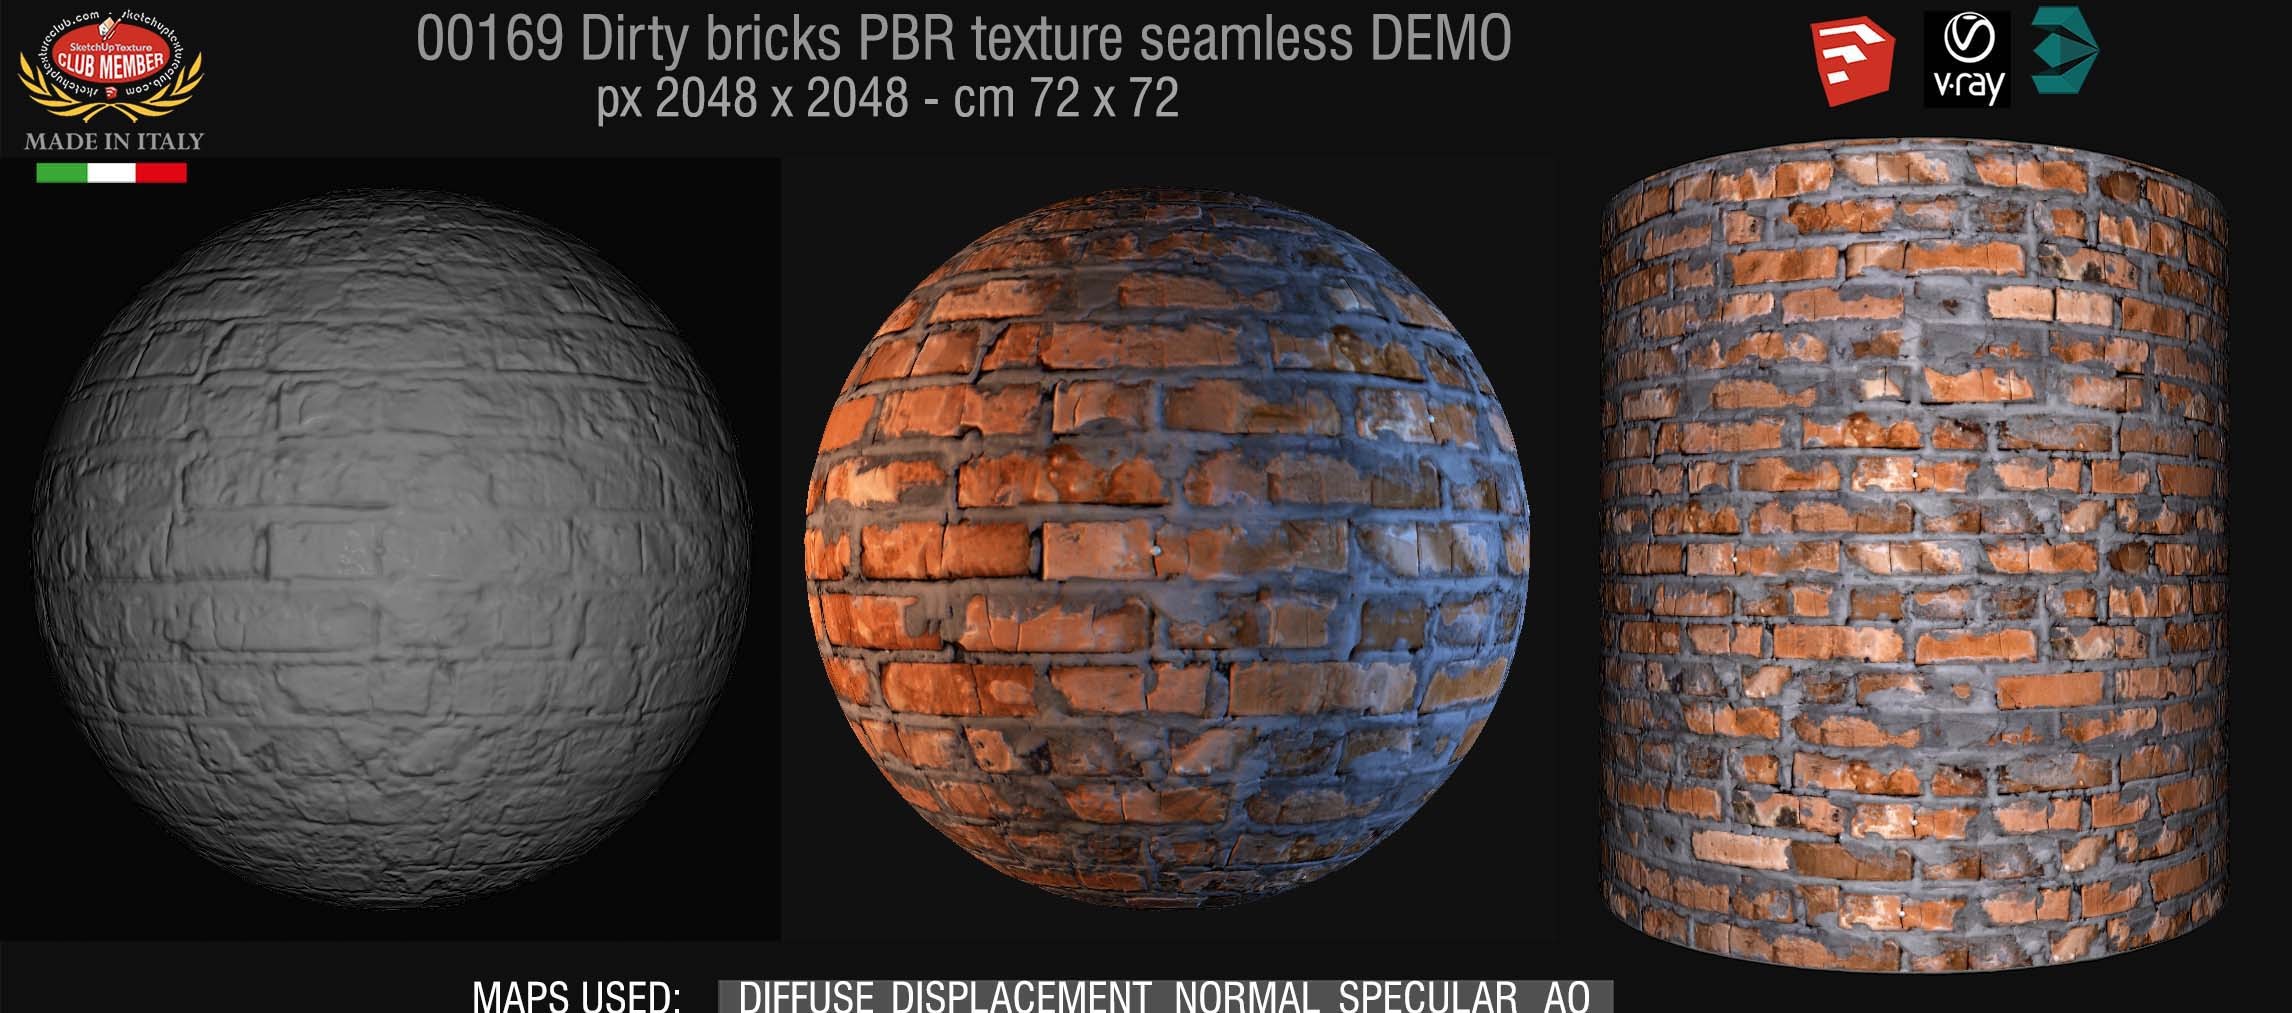 00169 Dirty bricks texture seamless